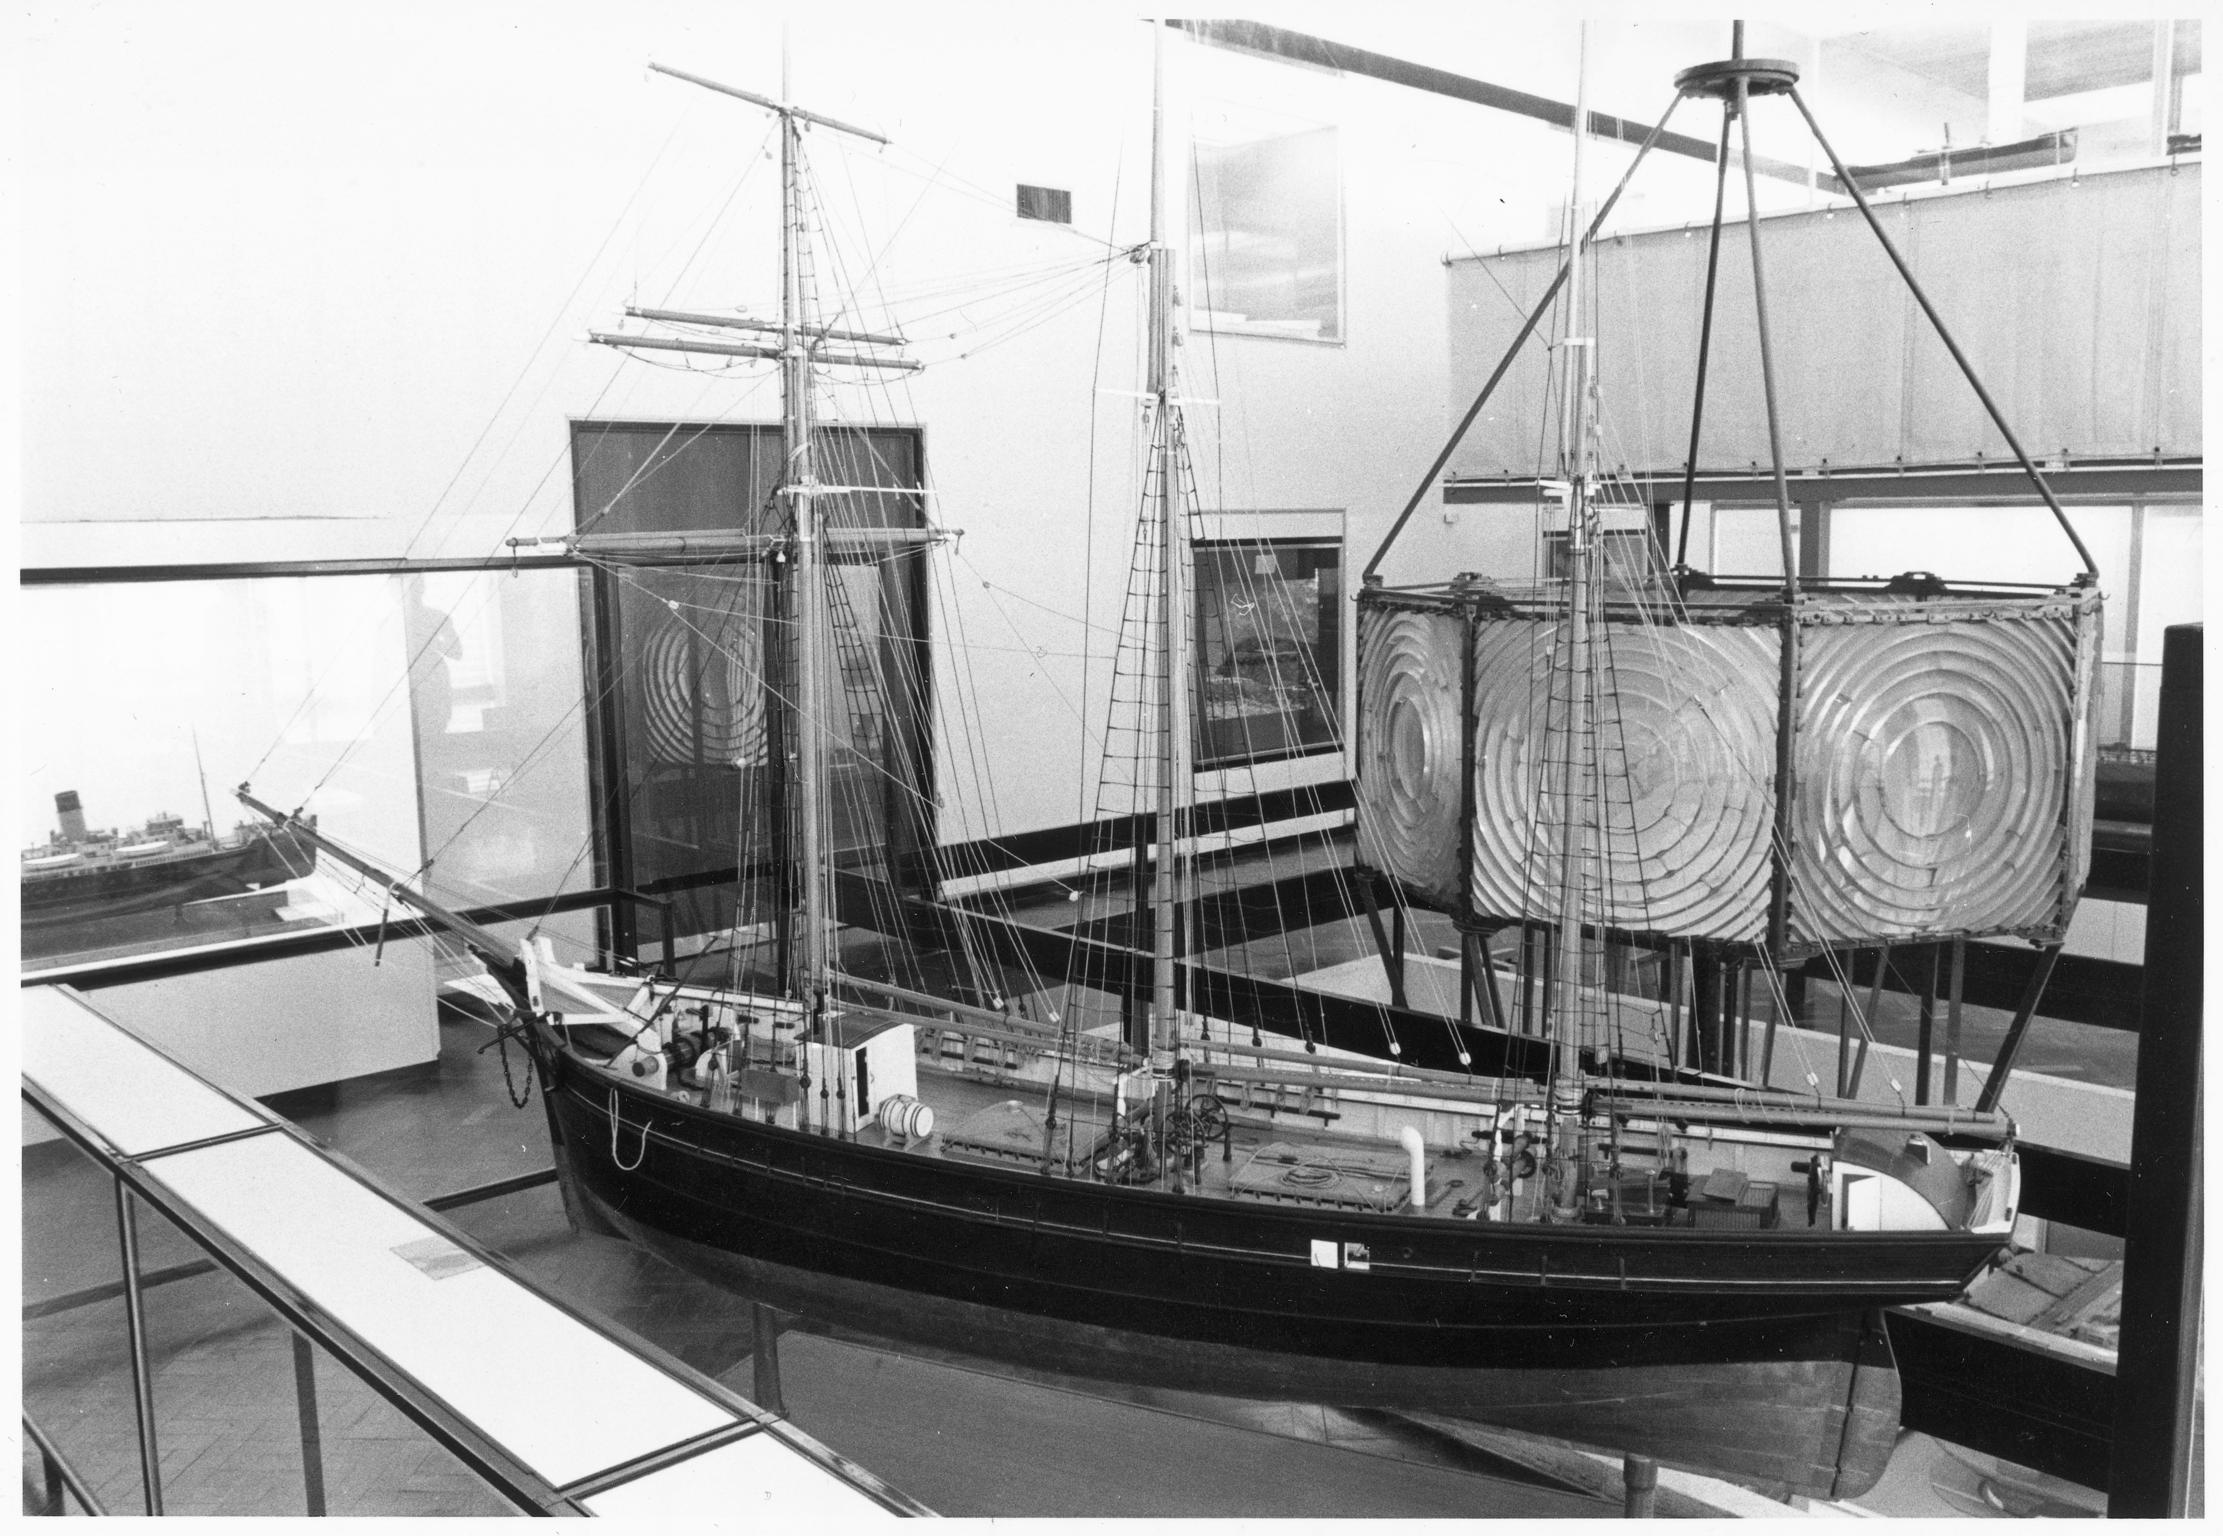 M.A. JAMES, full hull ship model